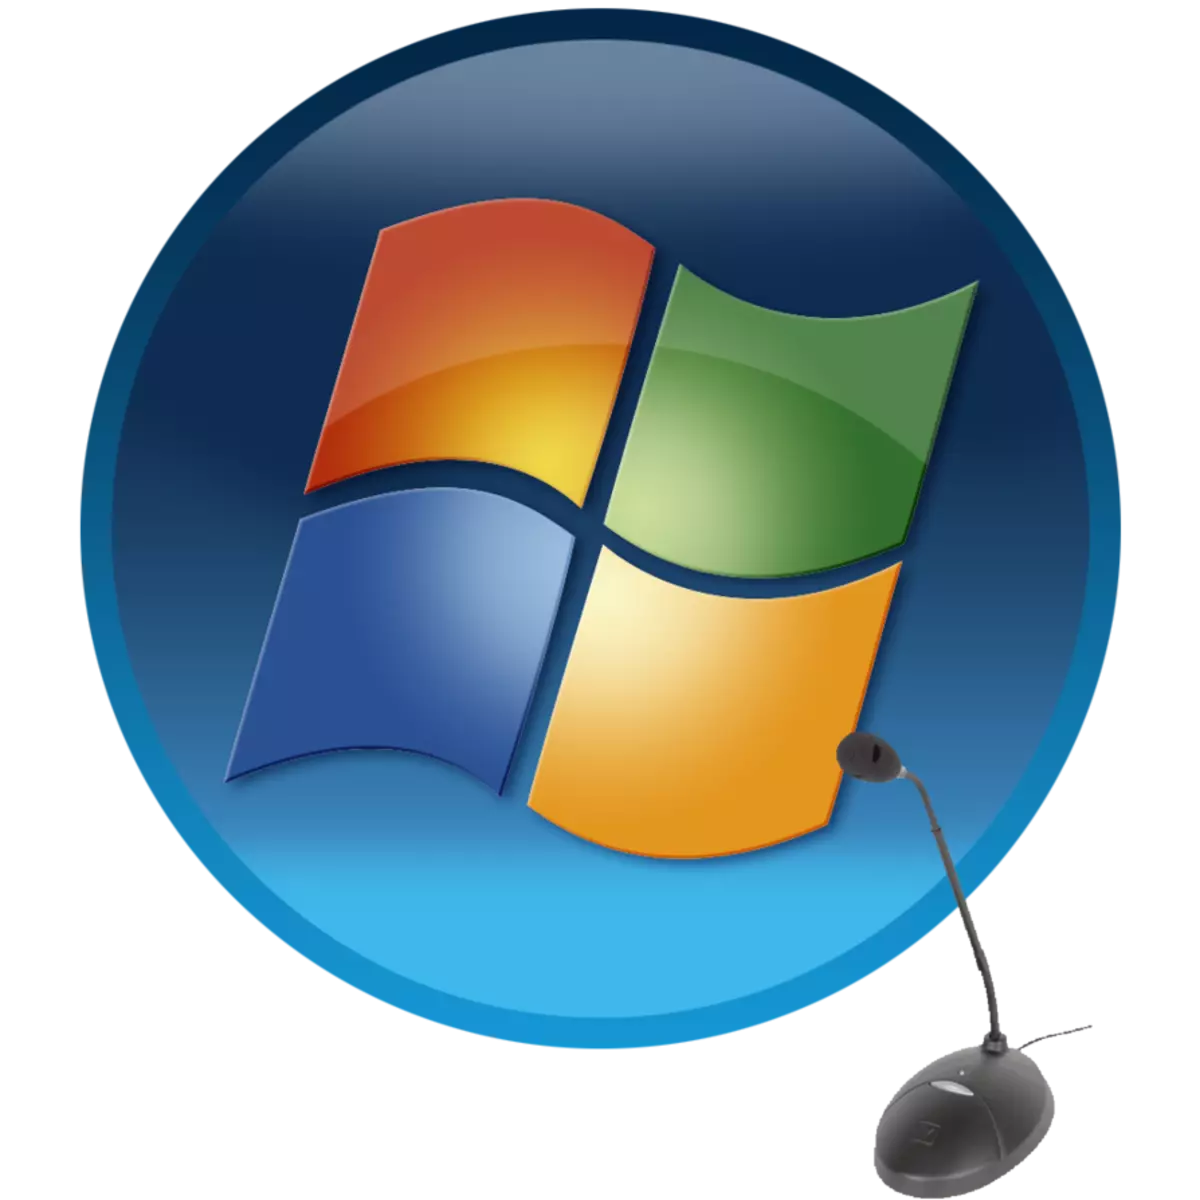 Windows 7 లో మైక్రోఫోన్ కనెక్షన్